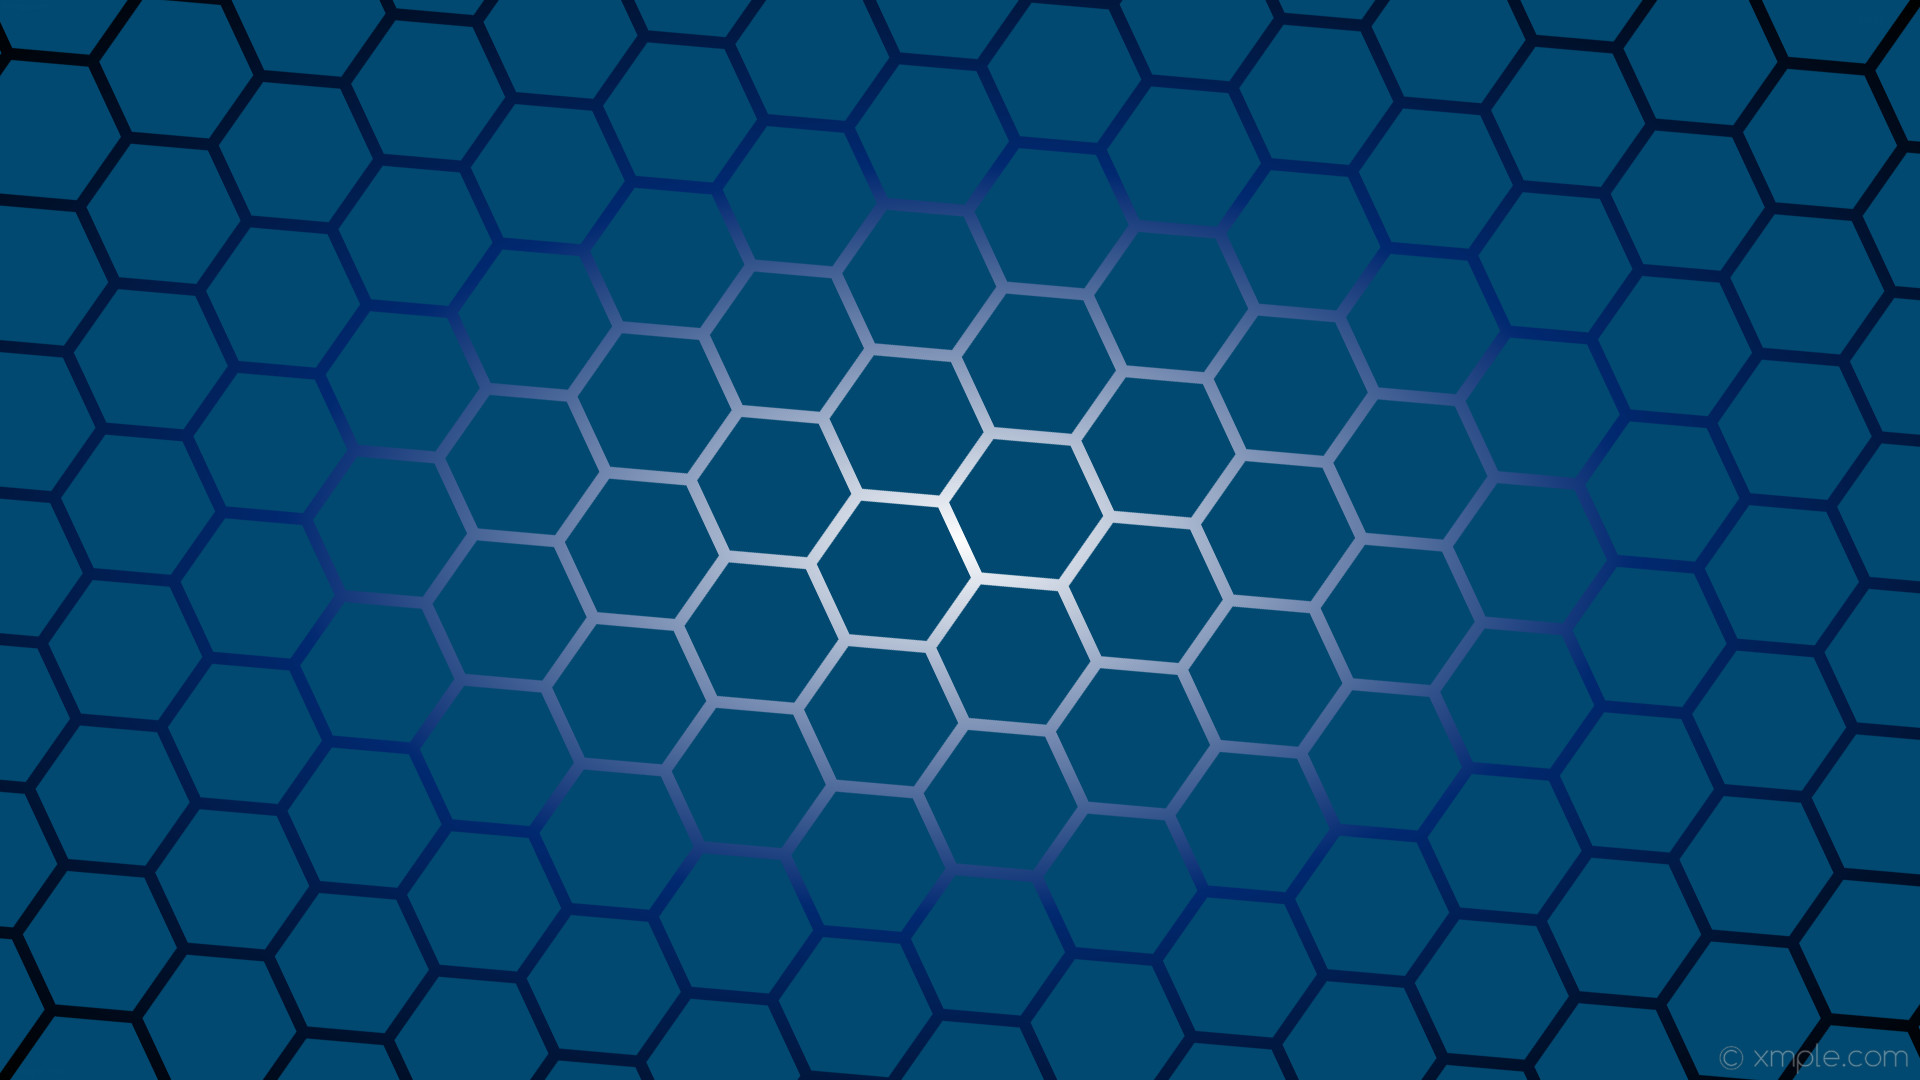 1920x1080 wallpaper gradient azure black hexagon glow white #014970 #ffffff #012870  diagonal 25Â°